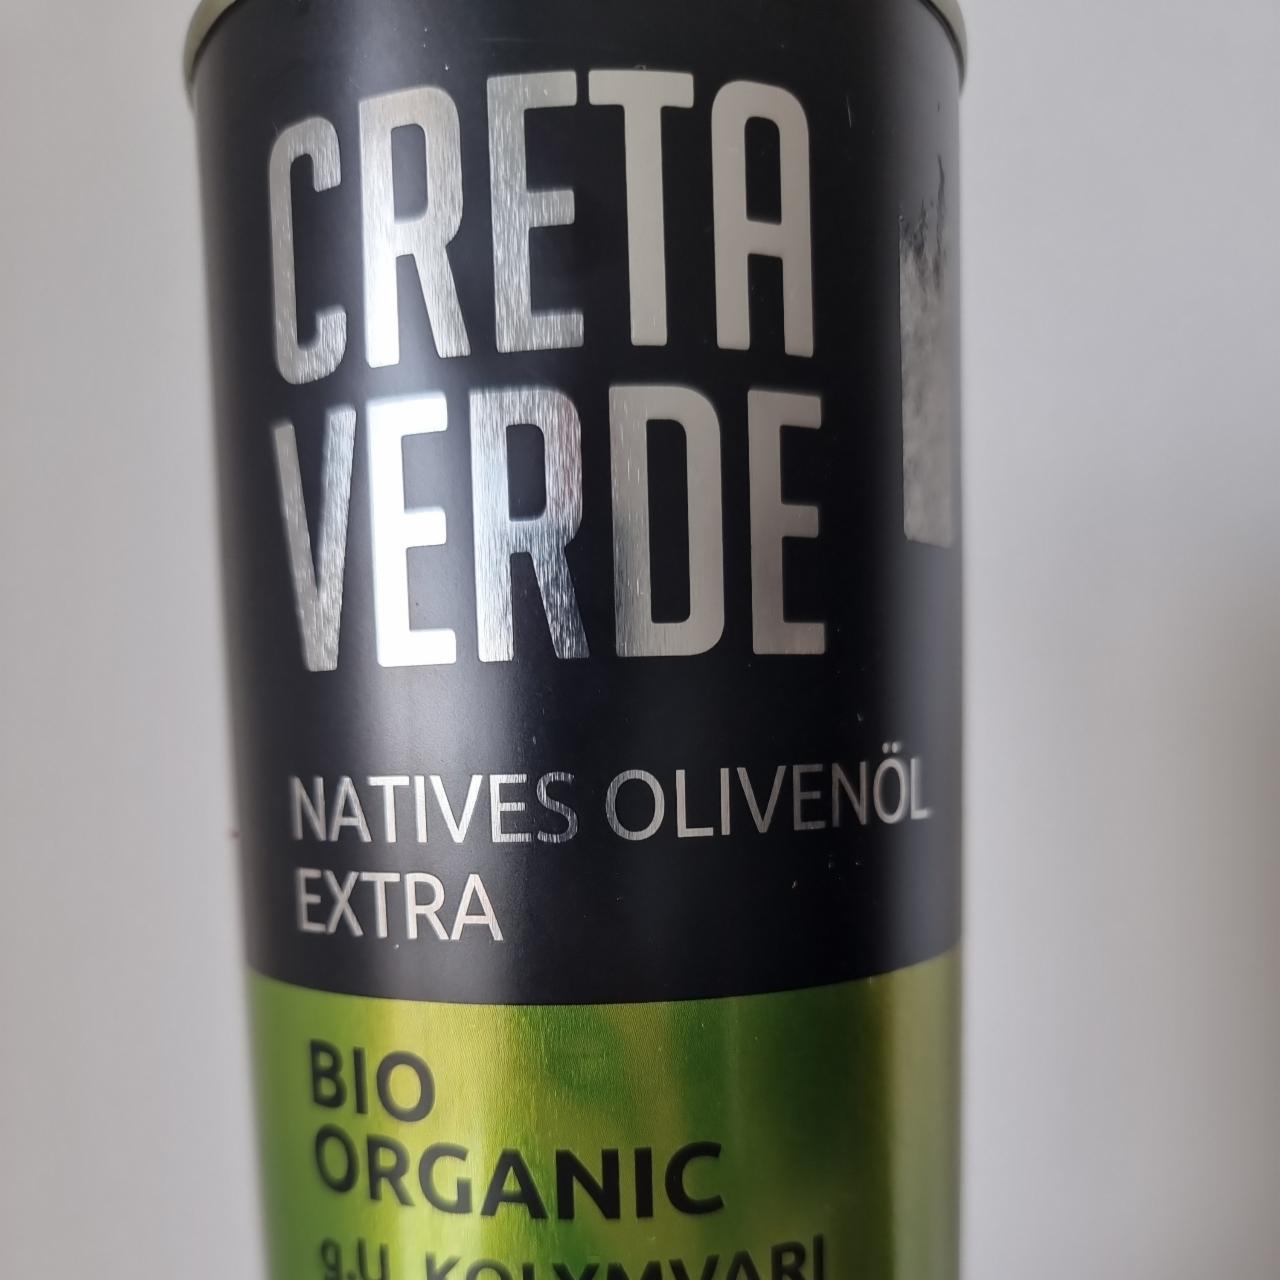 Fotografie - Natives Olivenöl Extra Creta verde